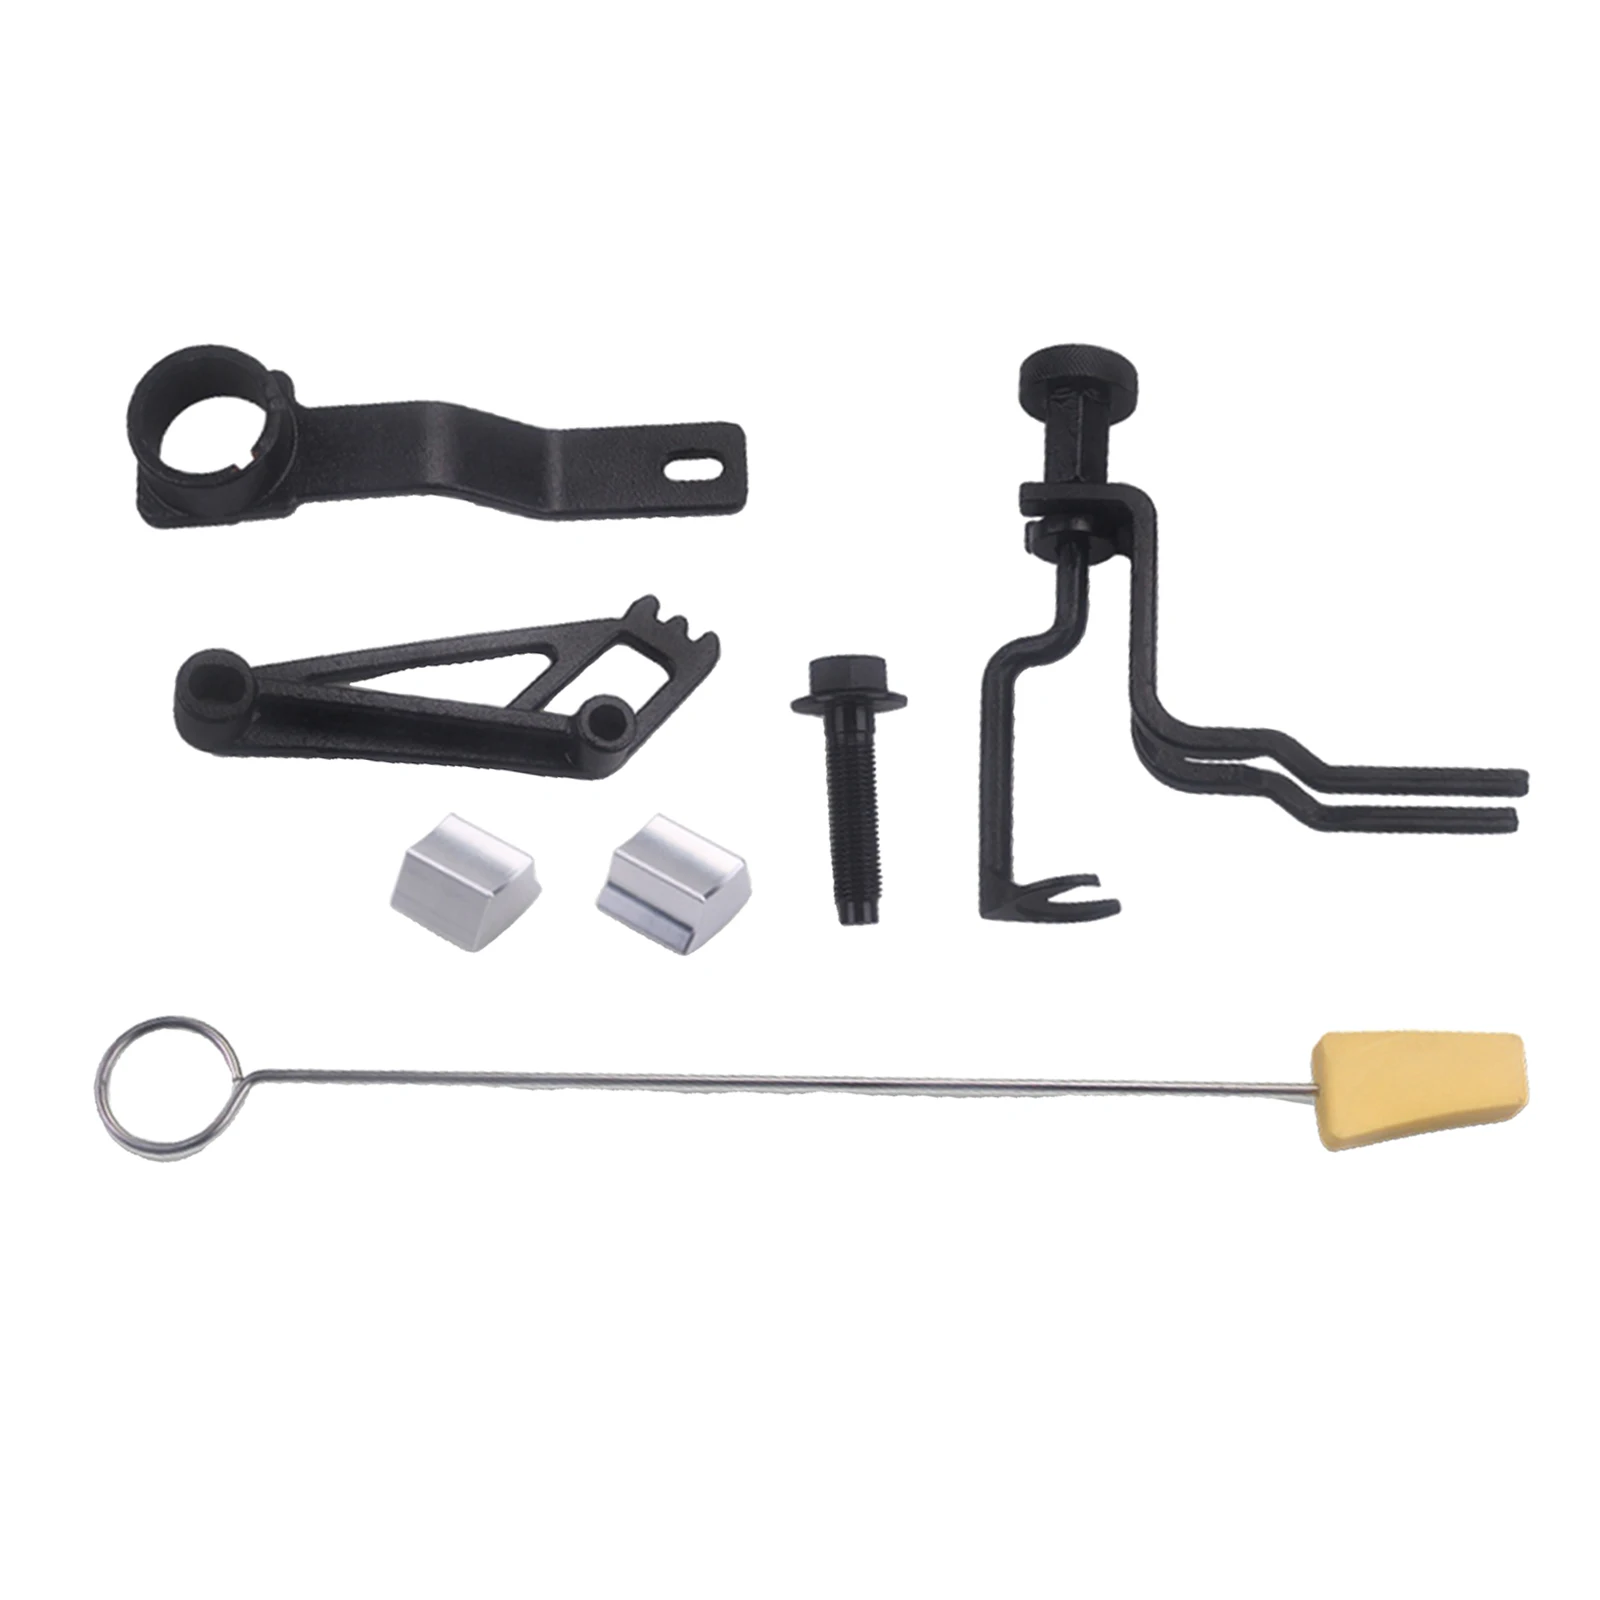 

Repair Tools Kit for Ford 4.6L/5.4L/6.8L 3V Engine Crankshaft Positioning Tool Timing Chain Locking Wedge Tool